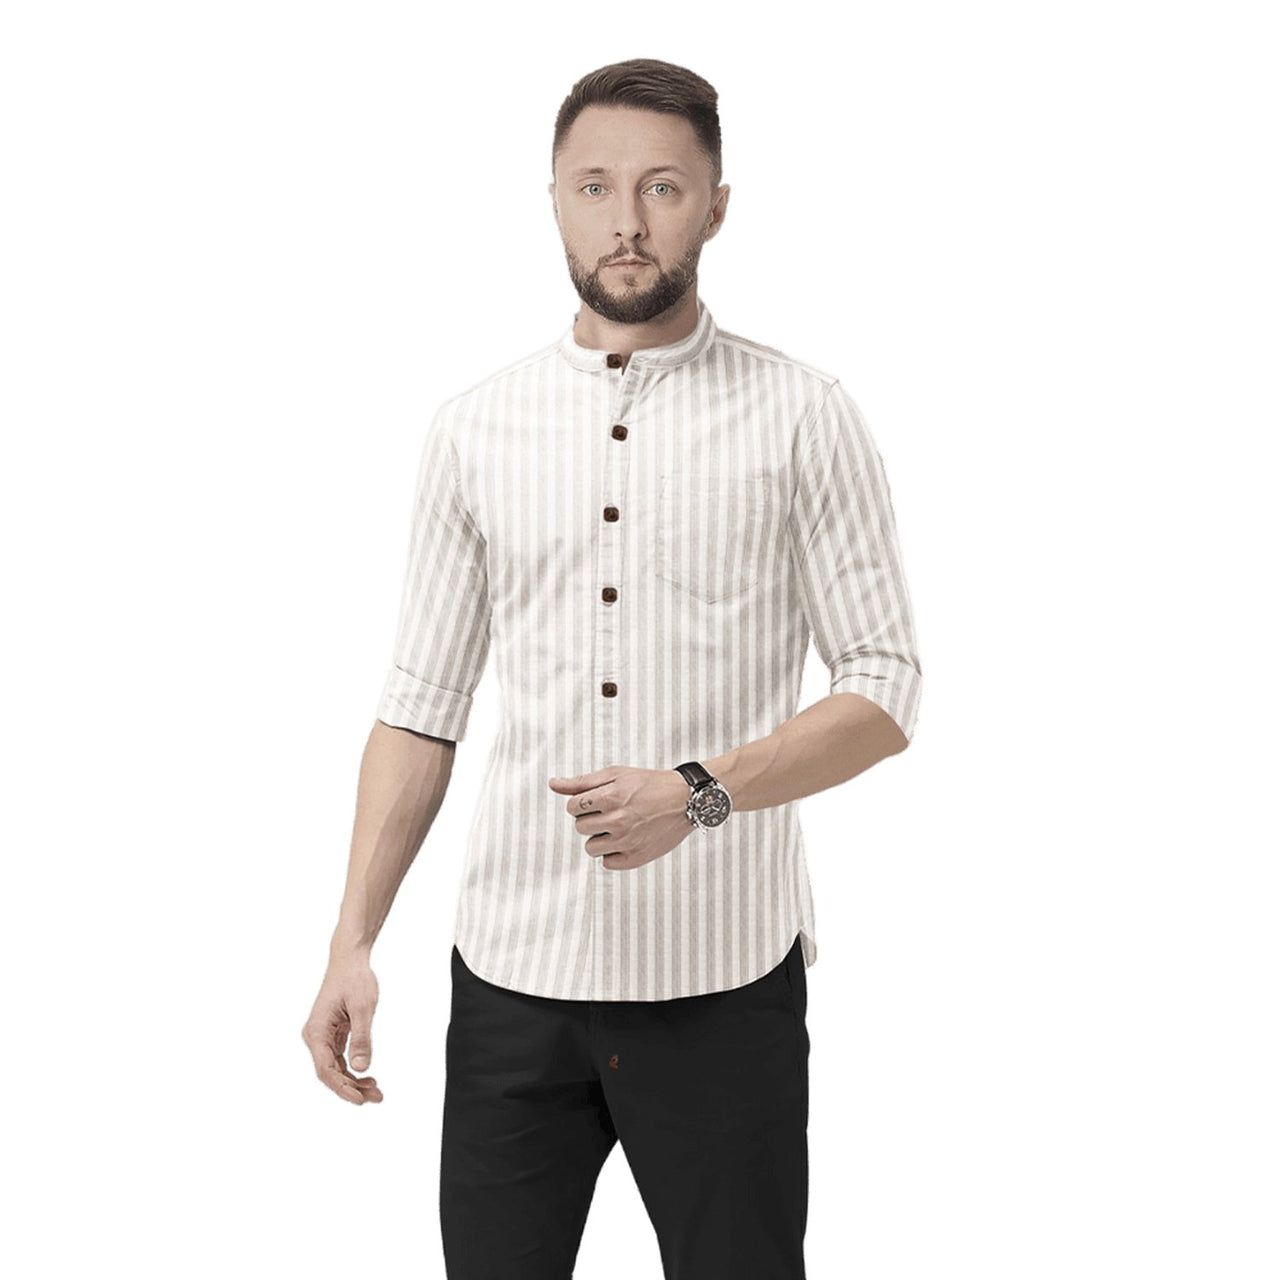 Hemploom - Minimalist Pure Hemp Shirt in Stripes - 888 - CBD Store India